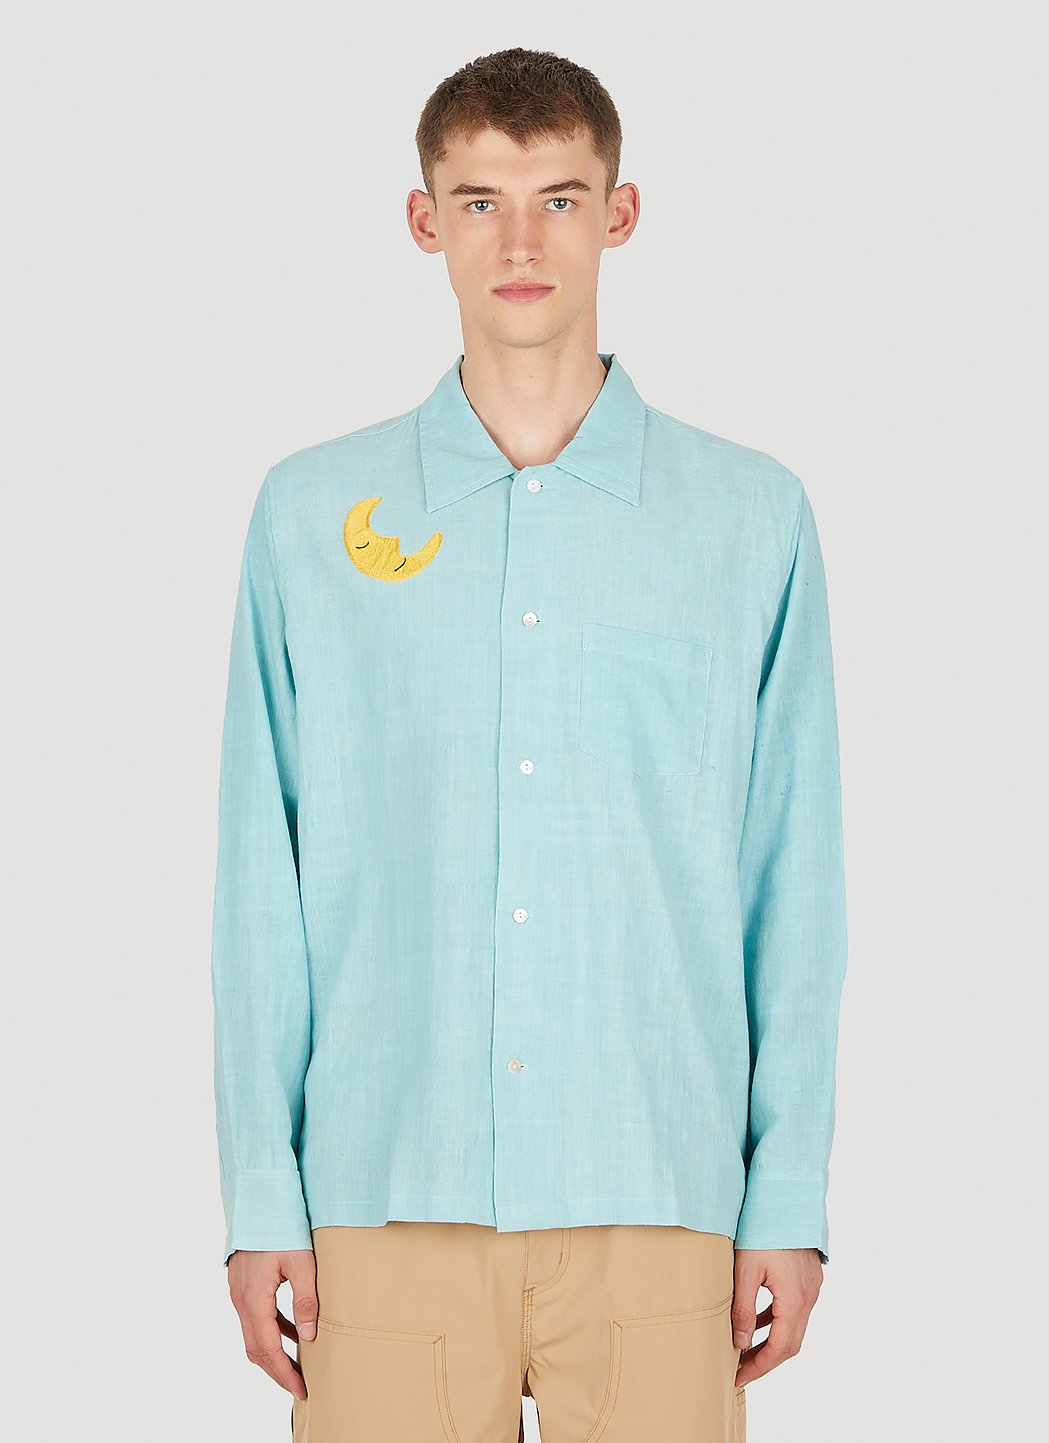 Boticelli Sunflower Shirt